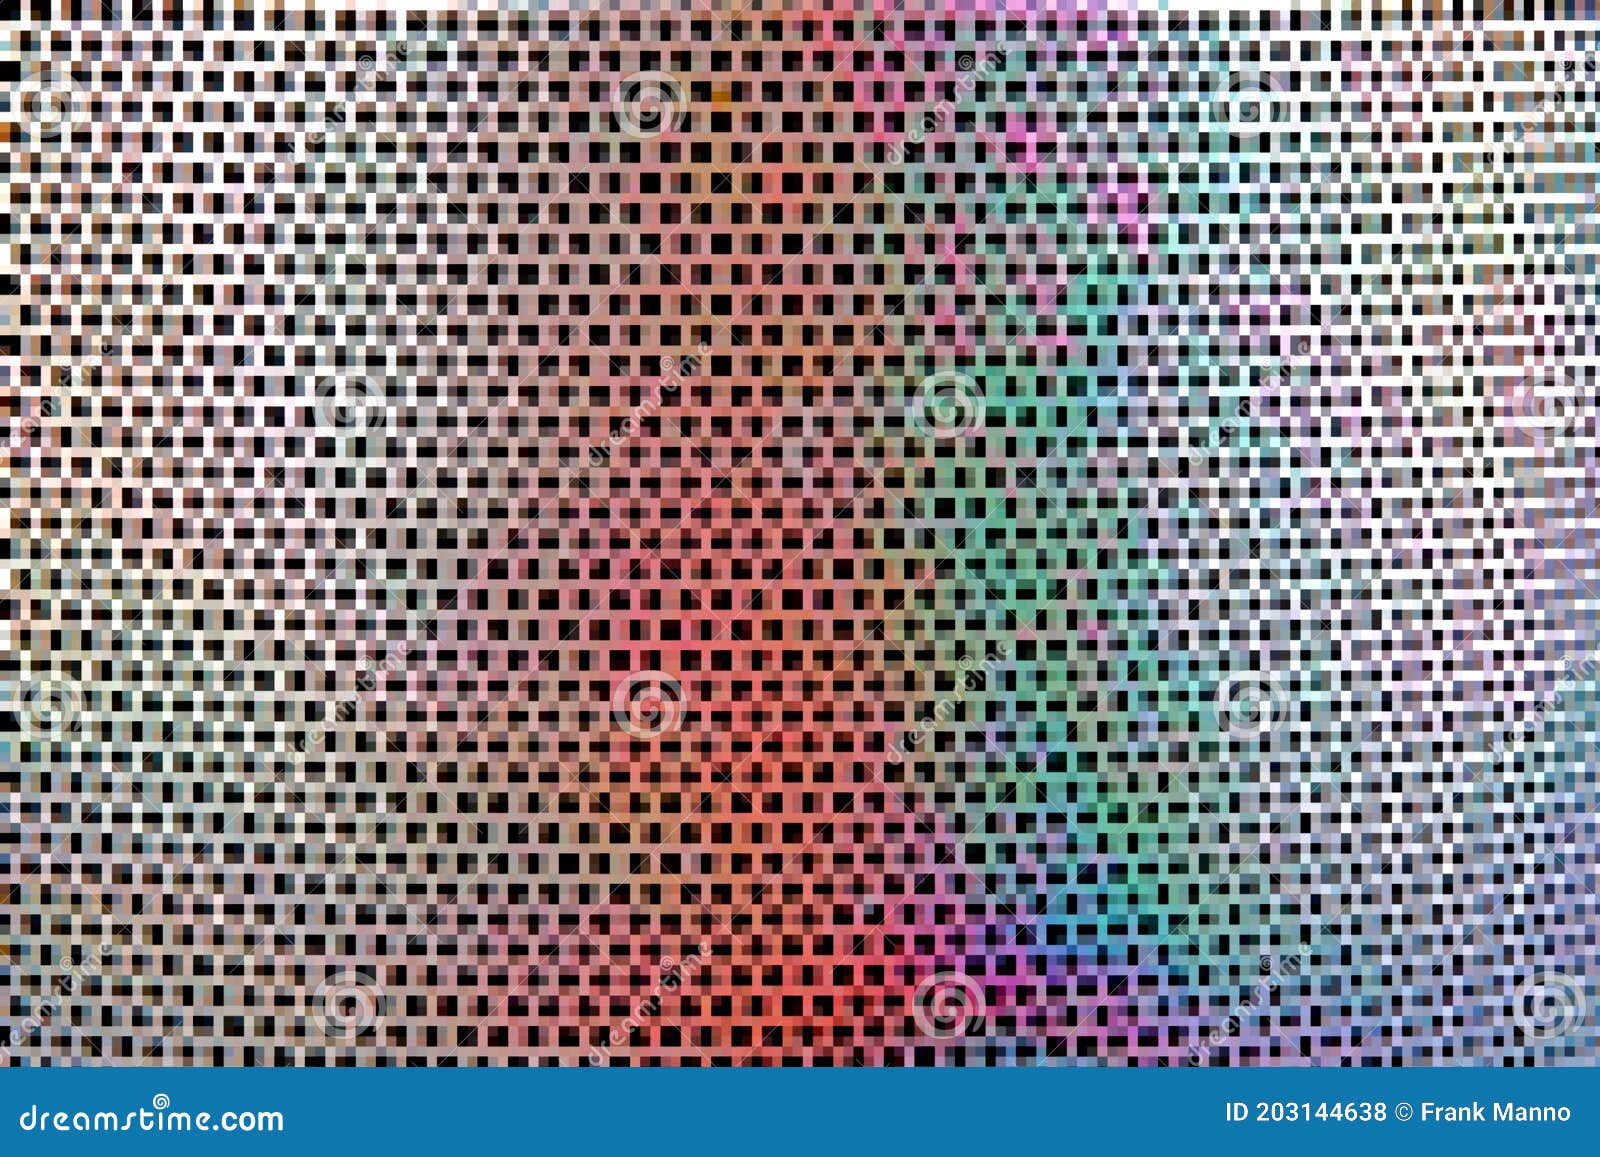 techno pixel background texture screen pattern industrial metal